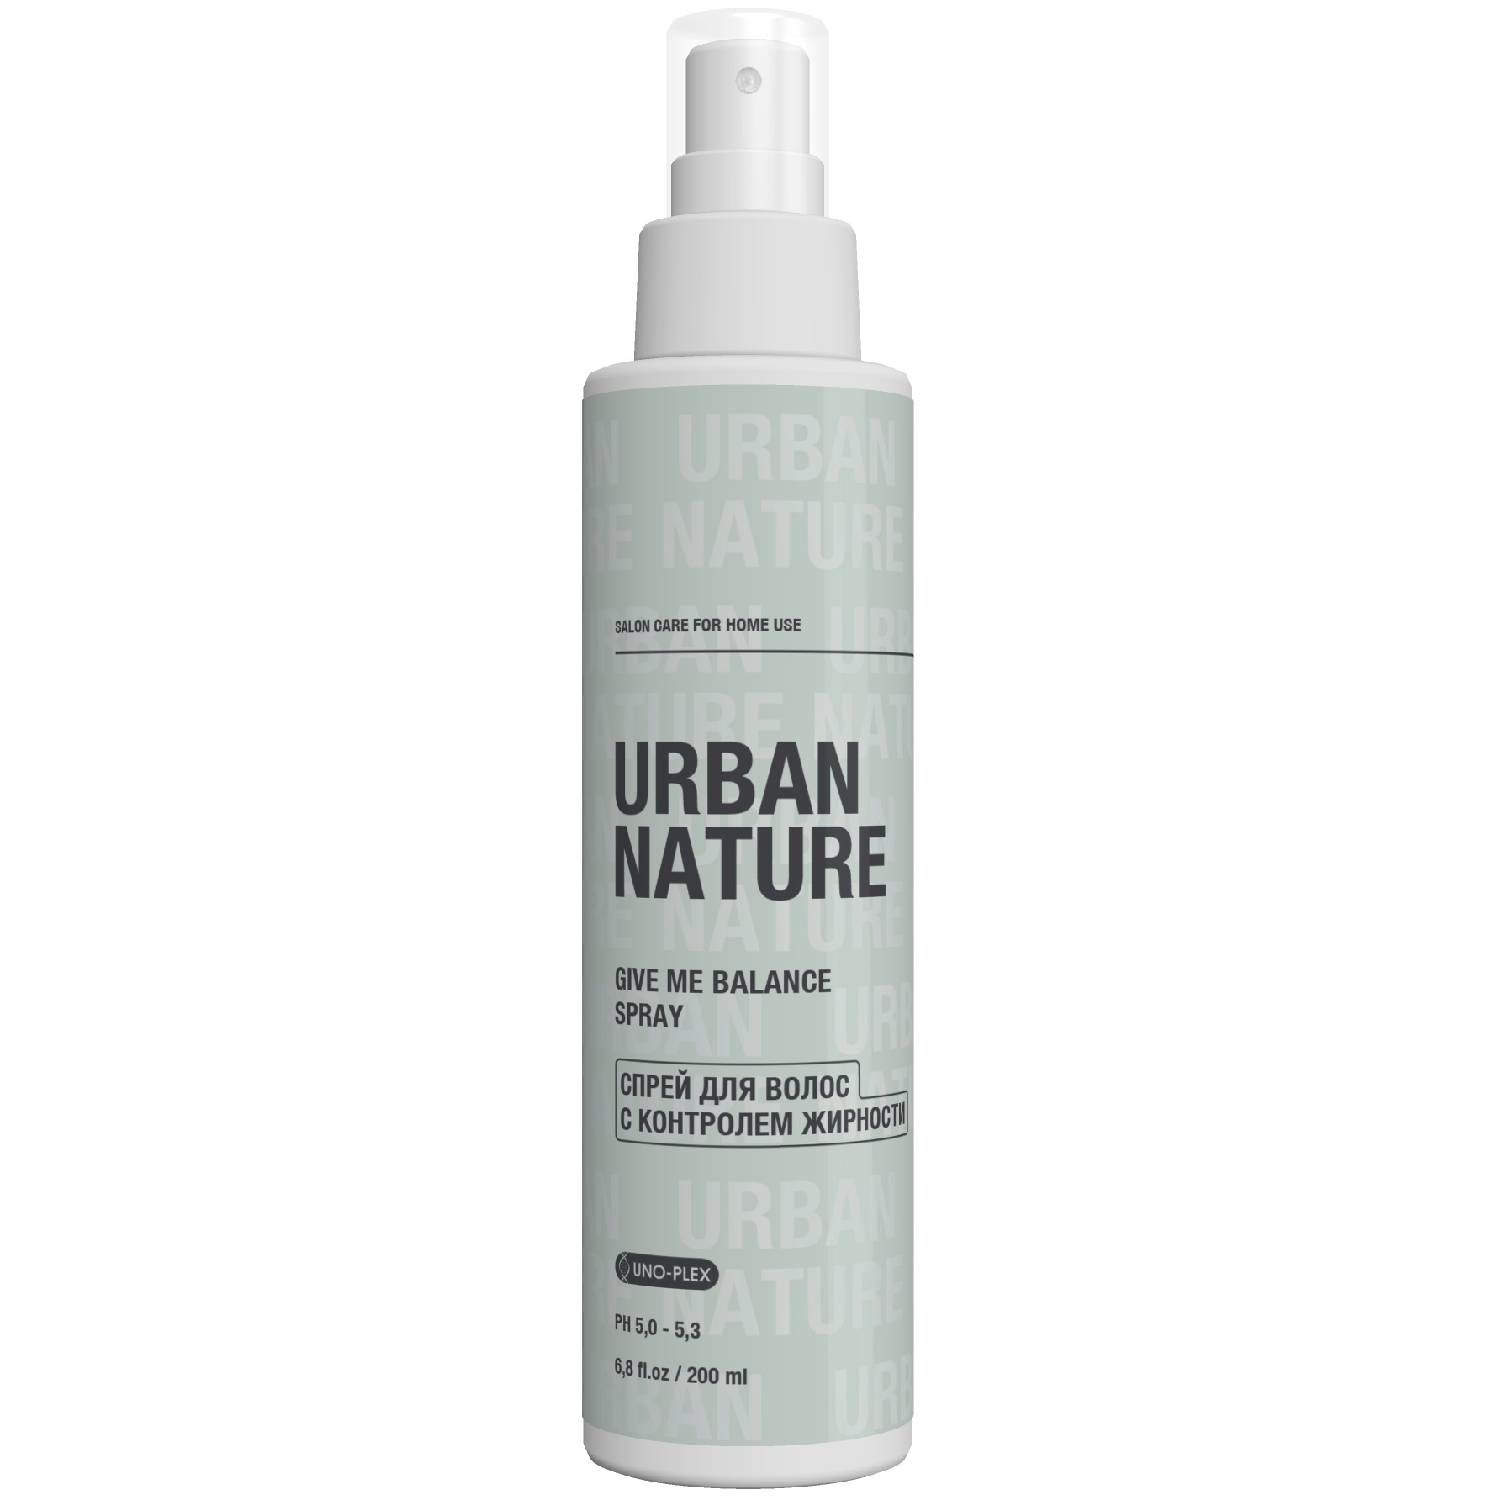 Urban Nature Спрей для контроля жирности волос, 200 мл (Urban Nature, Give Me Balance)